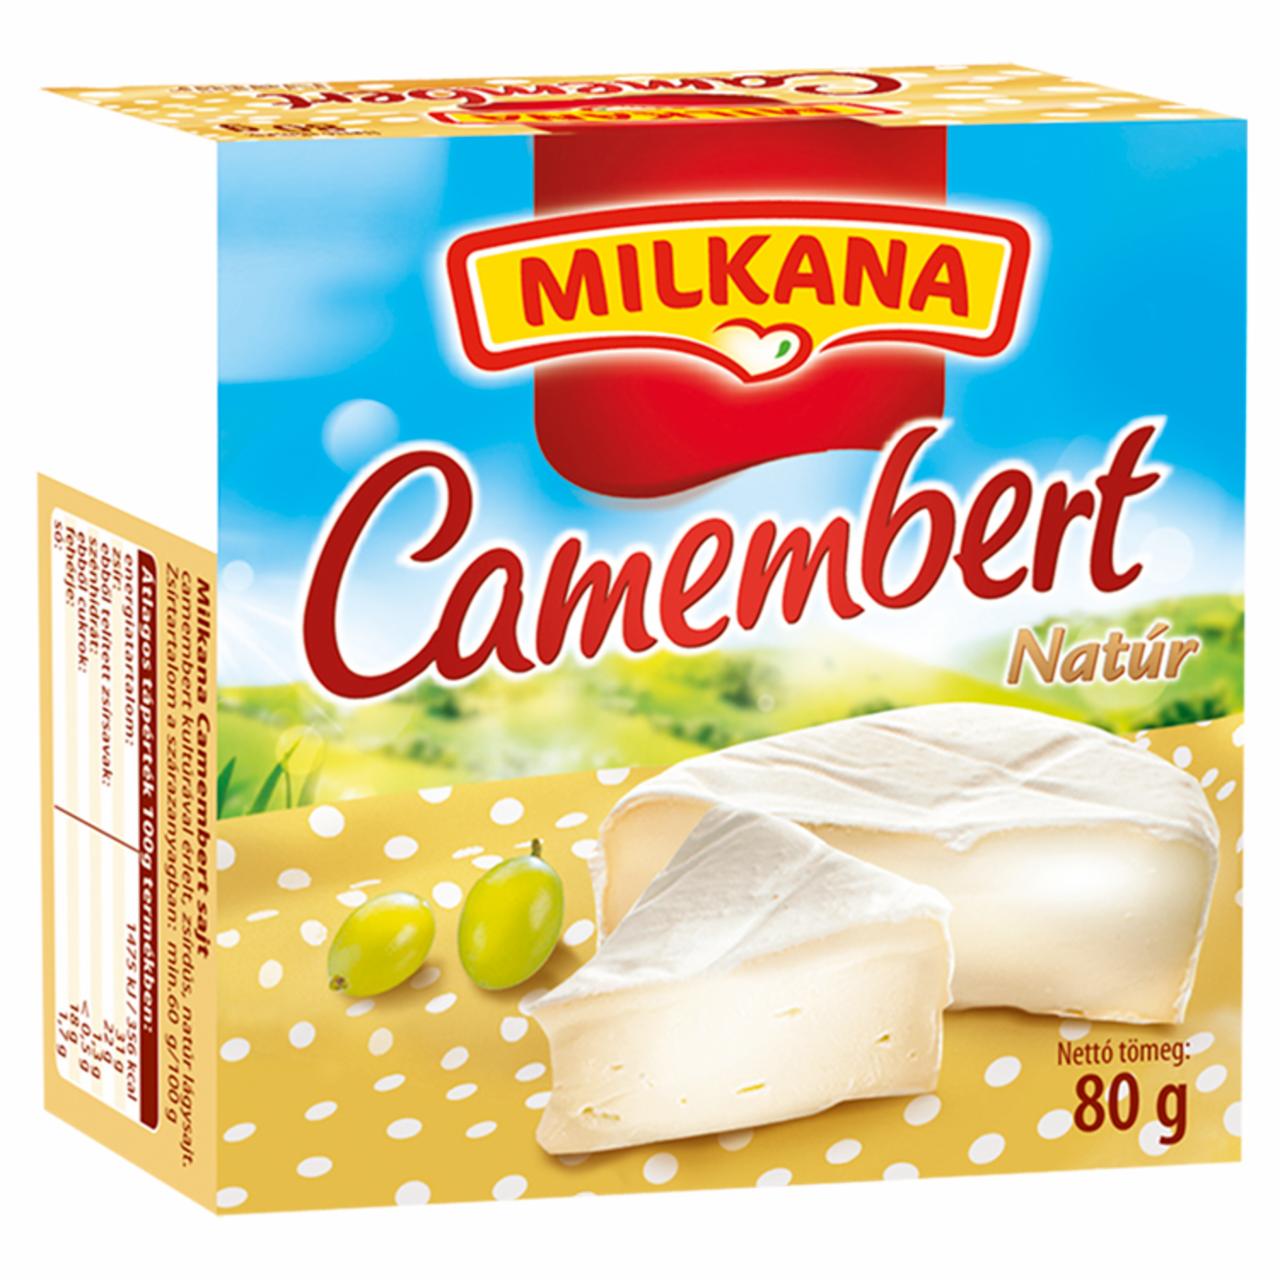 Képek - Milkana natúr camembert sajt 80 g